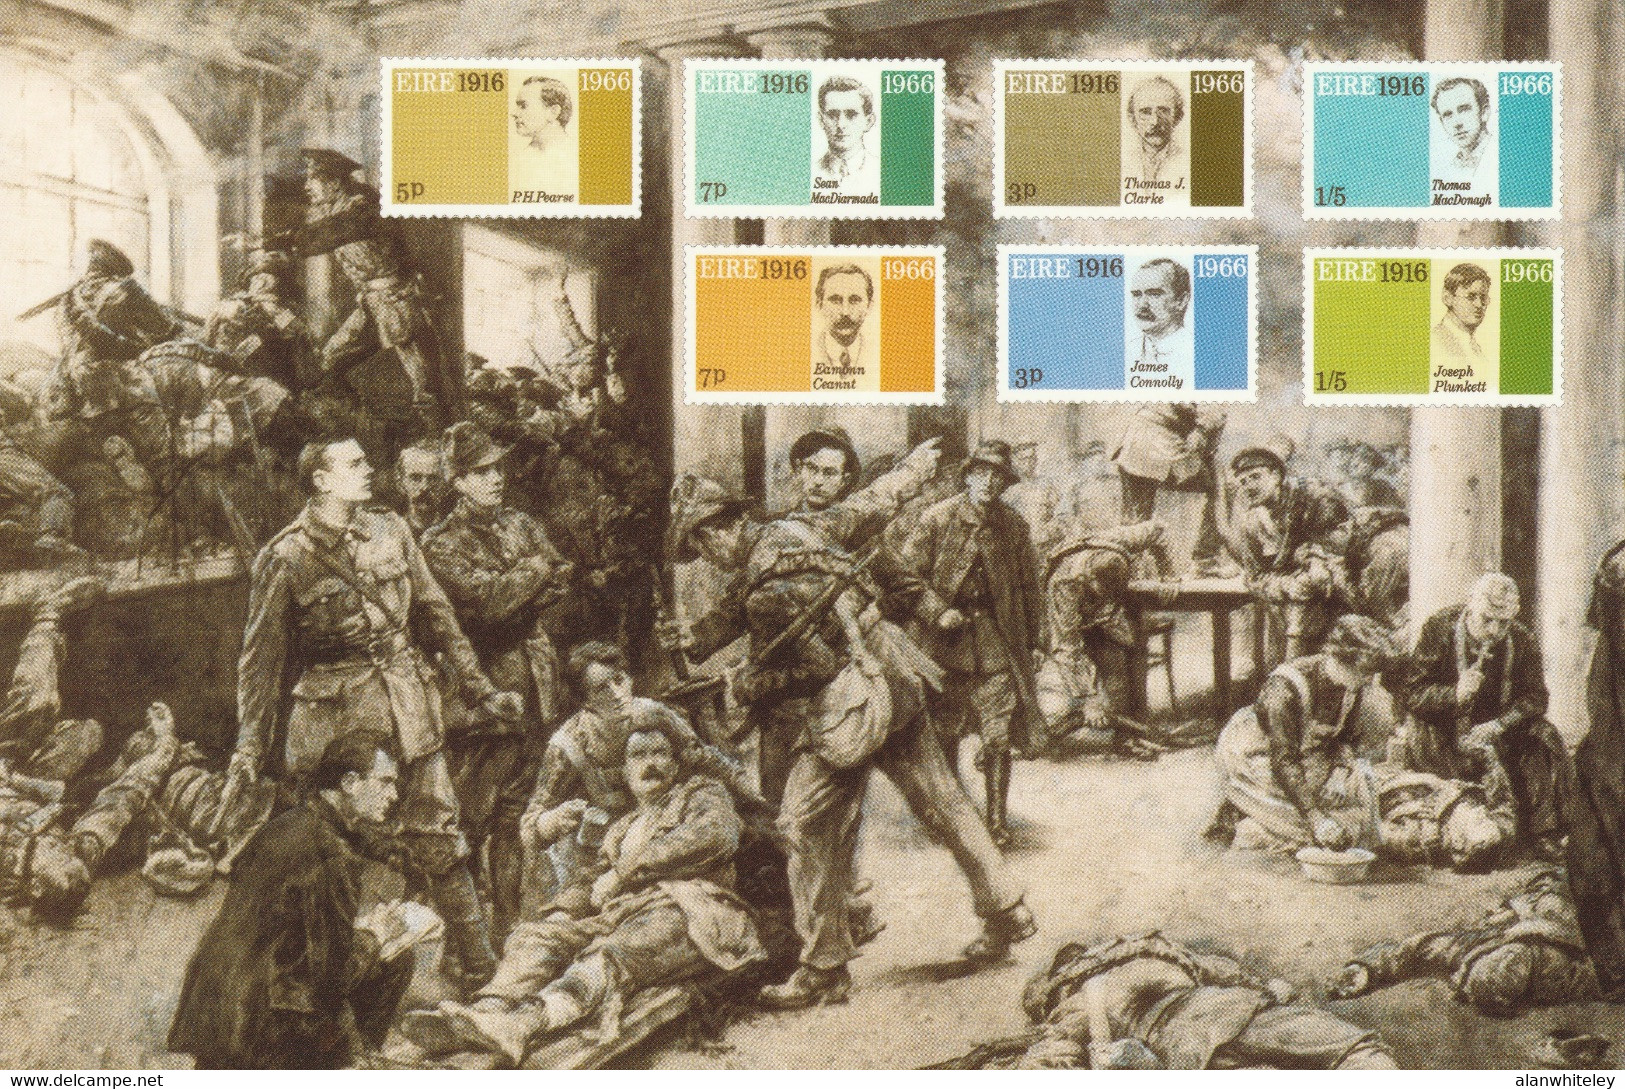 IRELAND 2002 General Post Office/2001 Issues: Set of 6 Postcards MINT/UNUSED